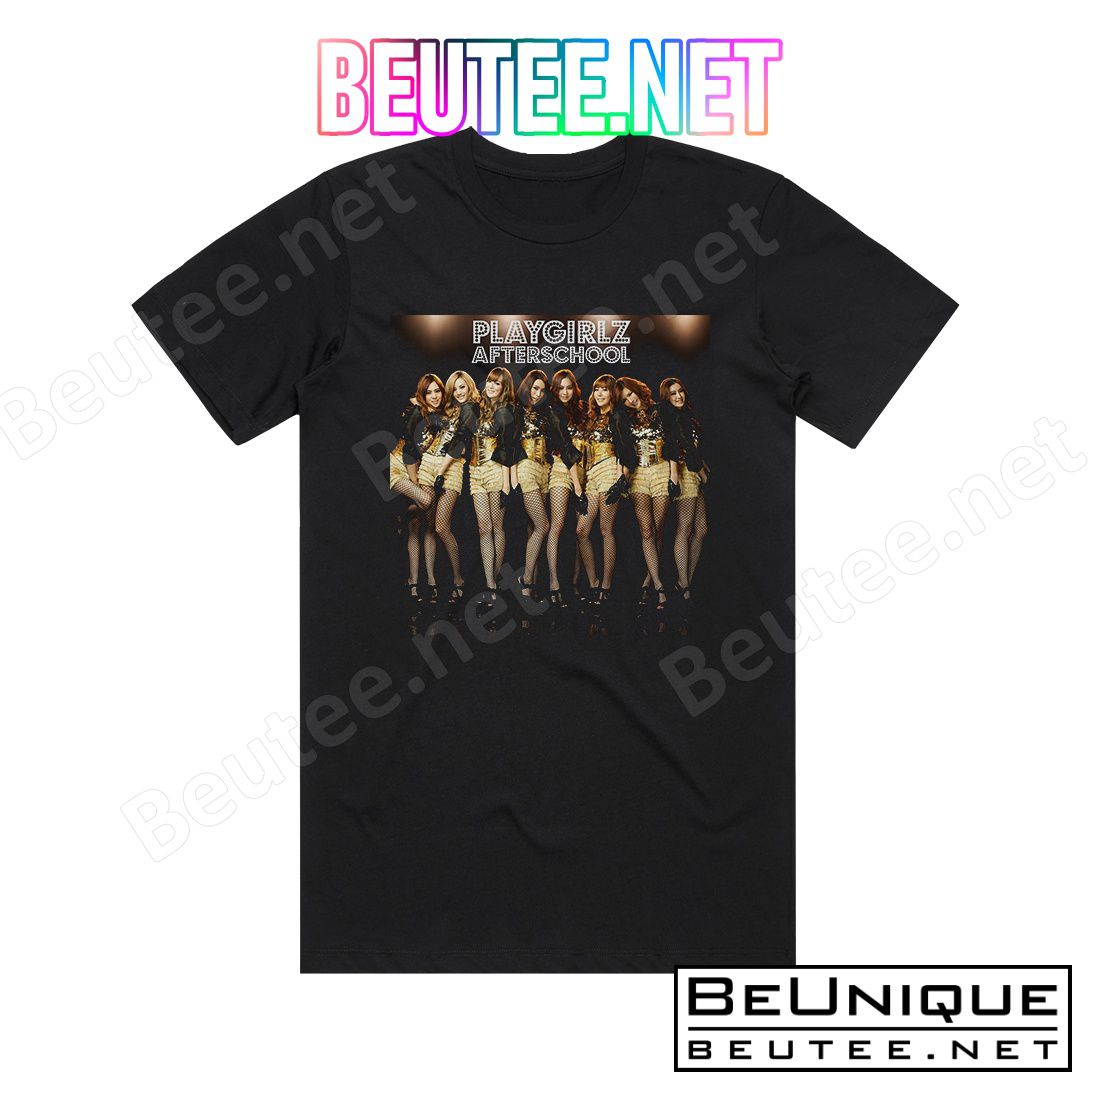 After School Playgirlz Album Cover T-shirt